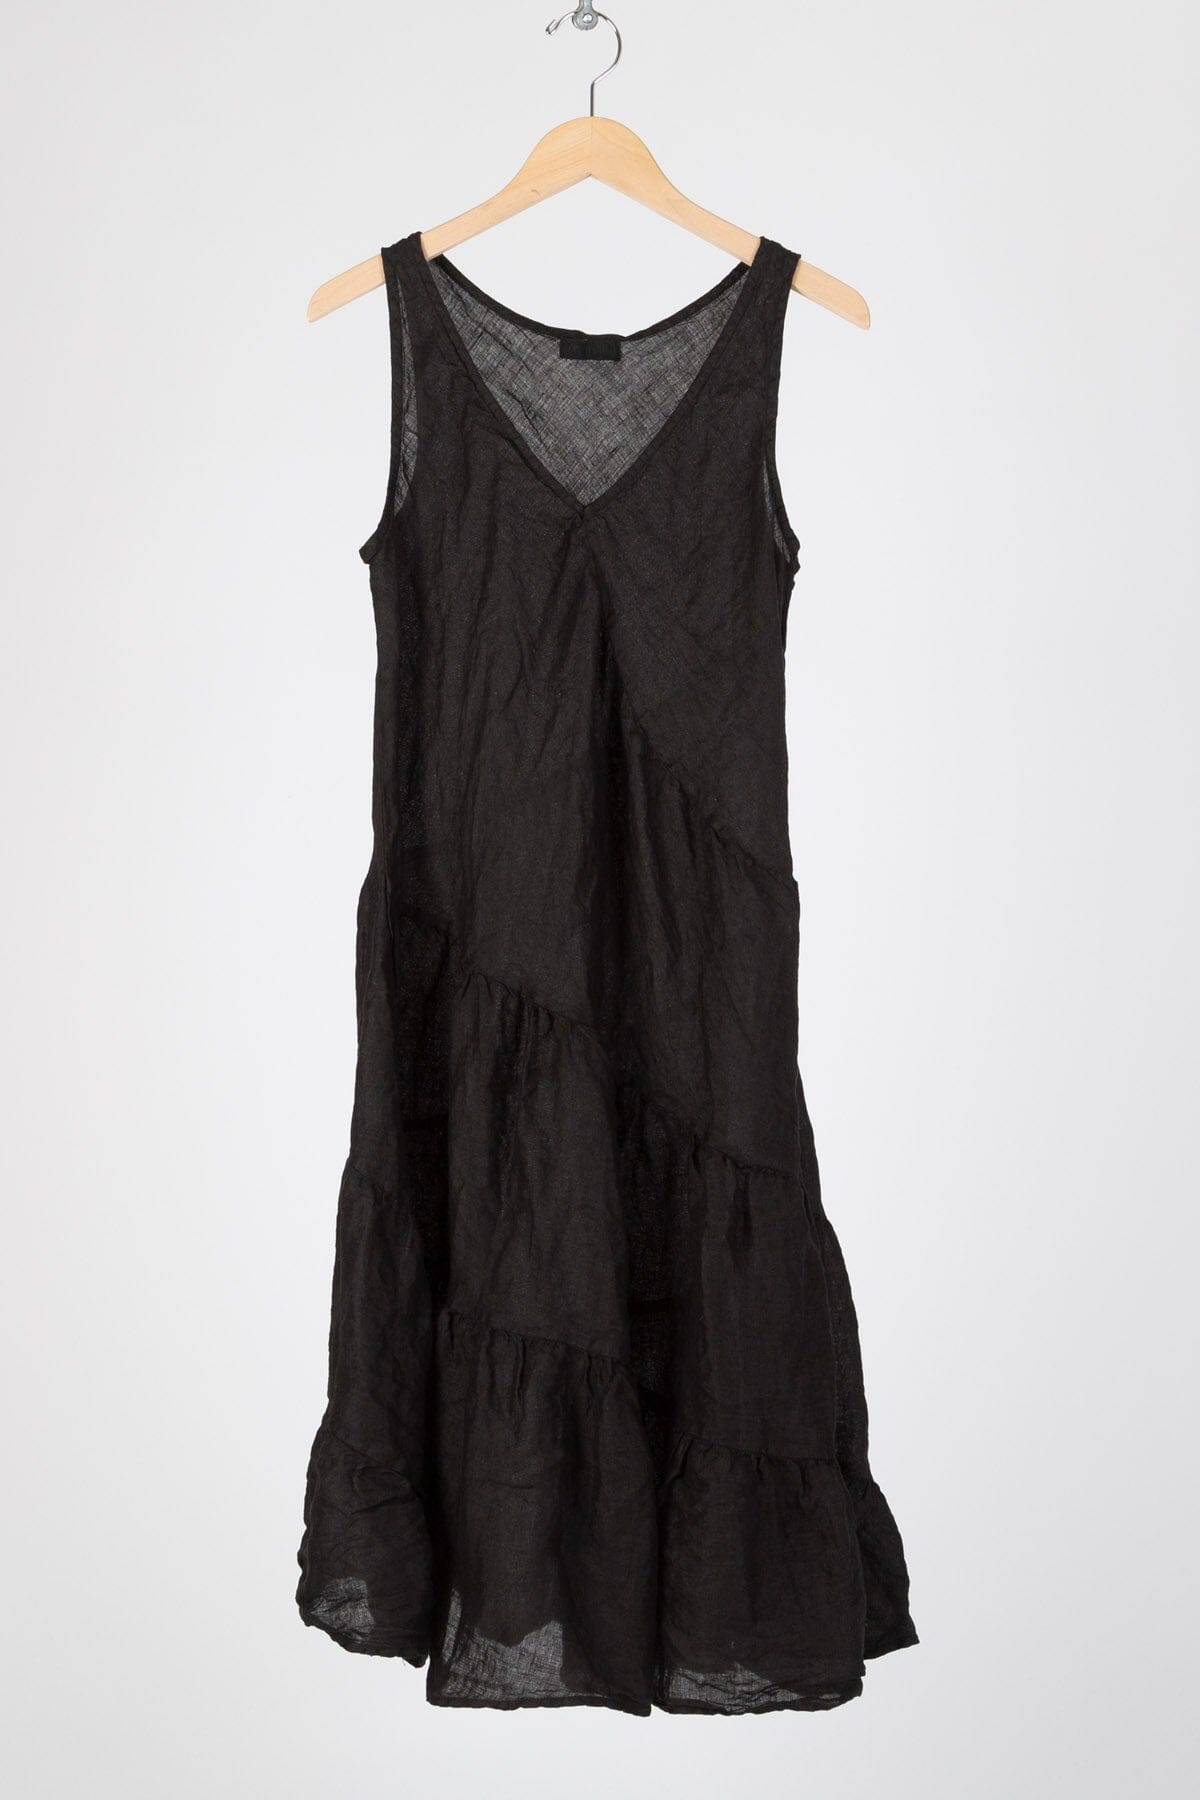 Kelly - Linen S17 - Solid Linen Dresses CP Shades black